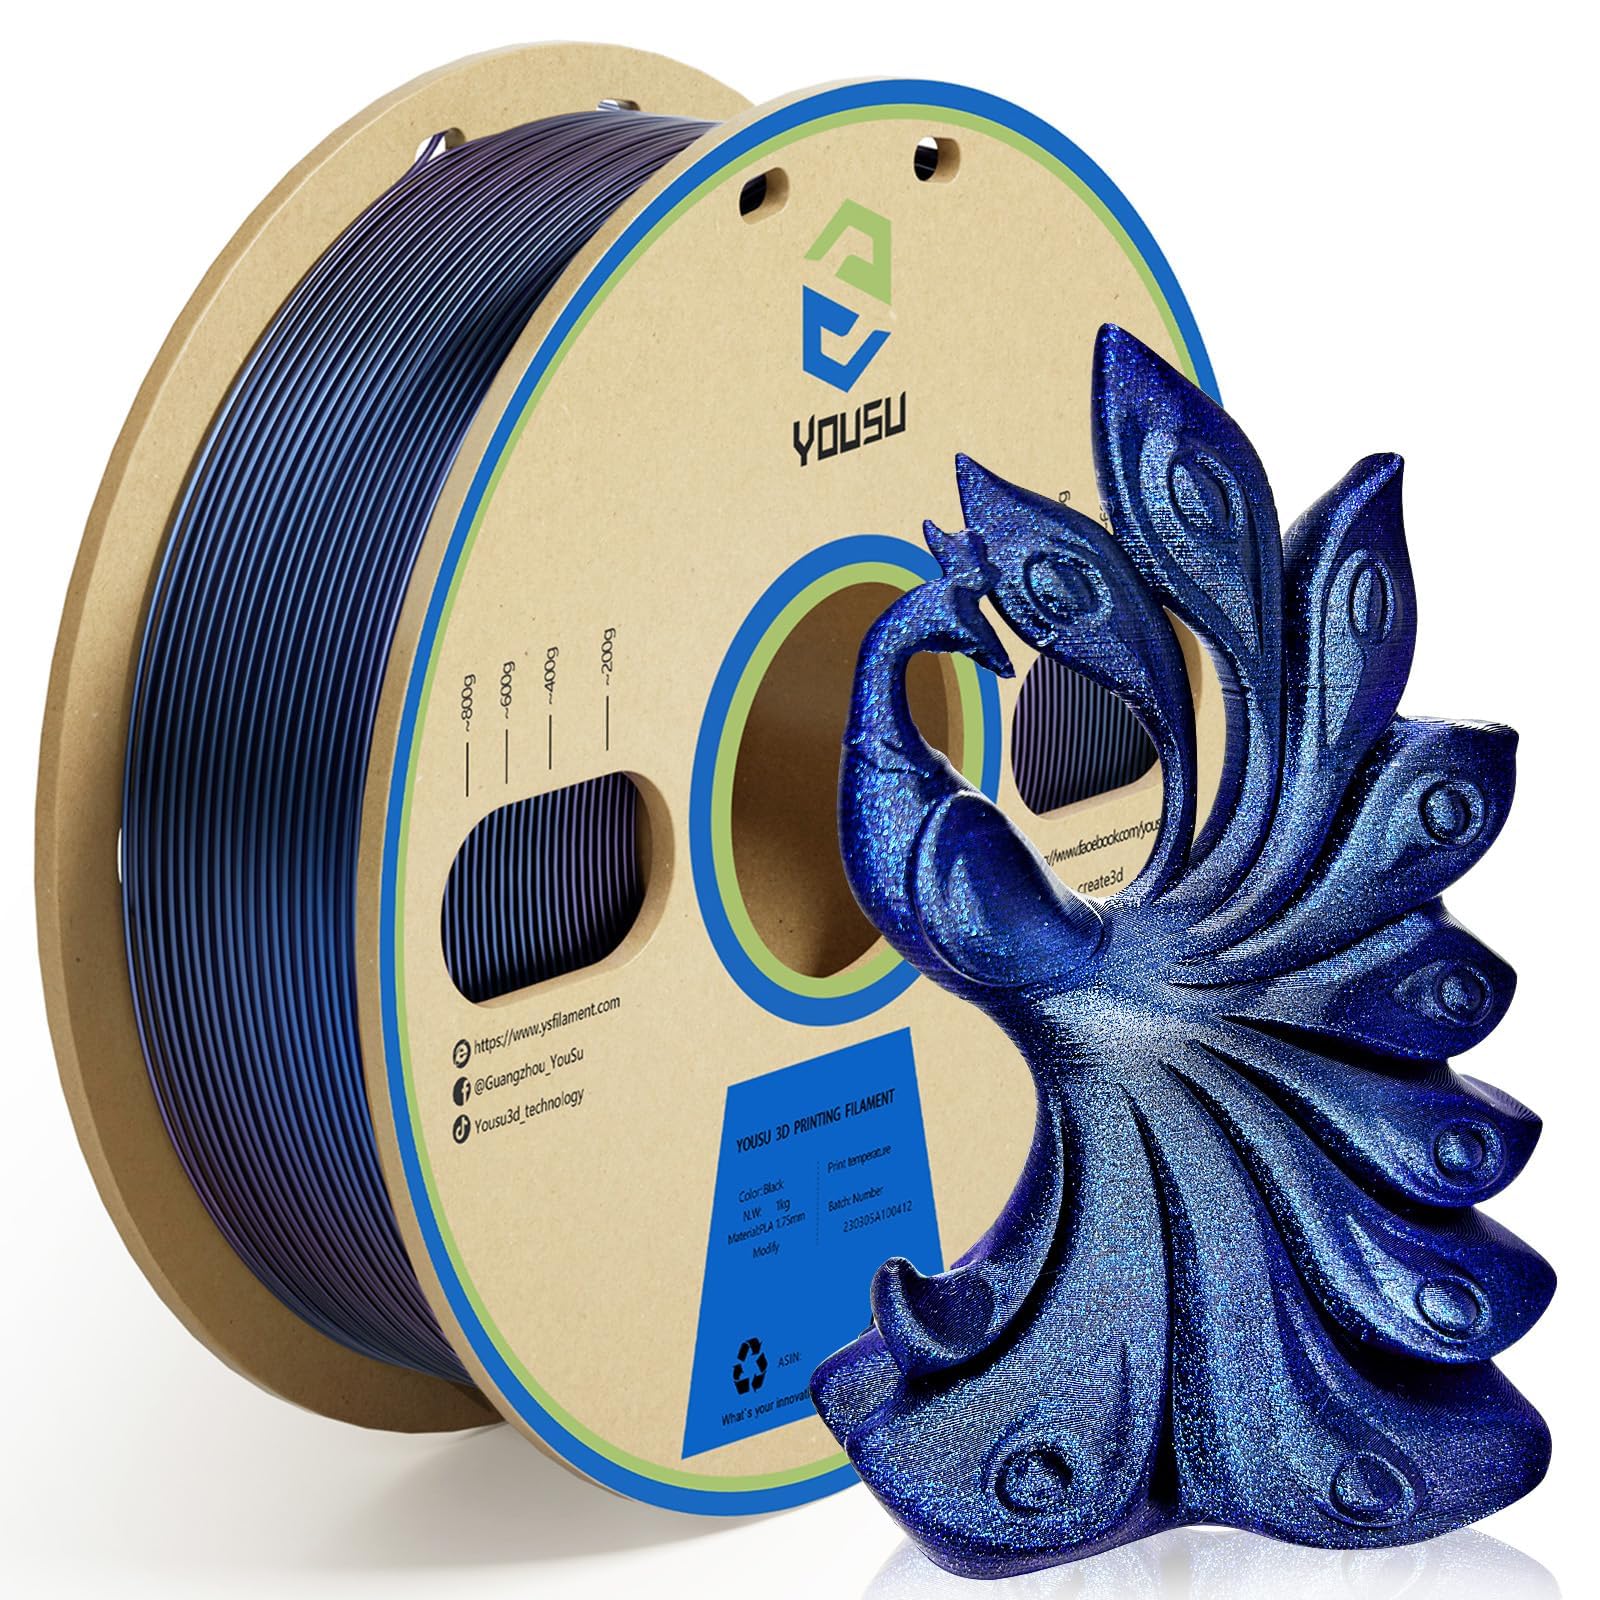 YOUSU Filament PLA tricolore - 1,75 mm (± 0,03 mm) - Filament